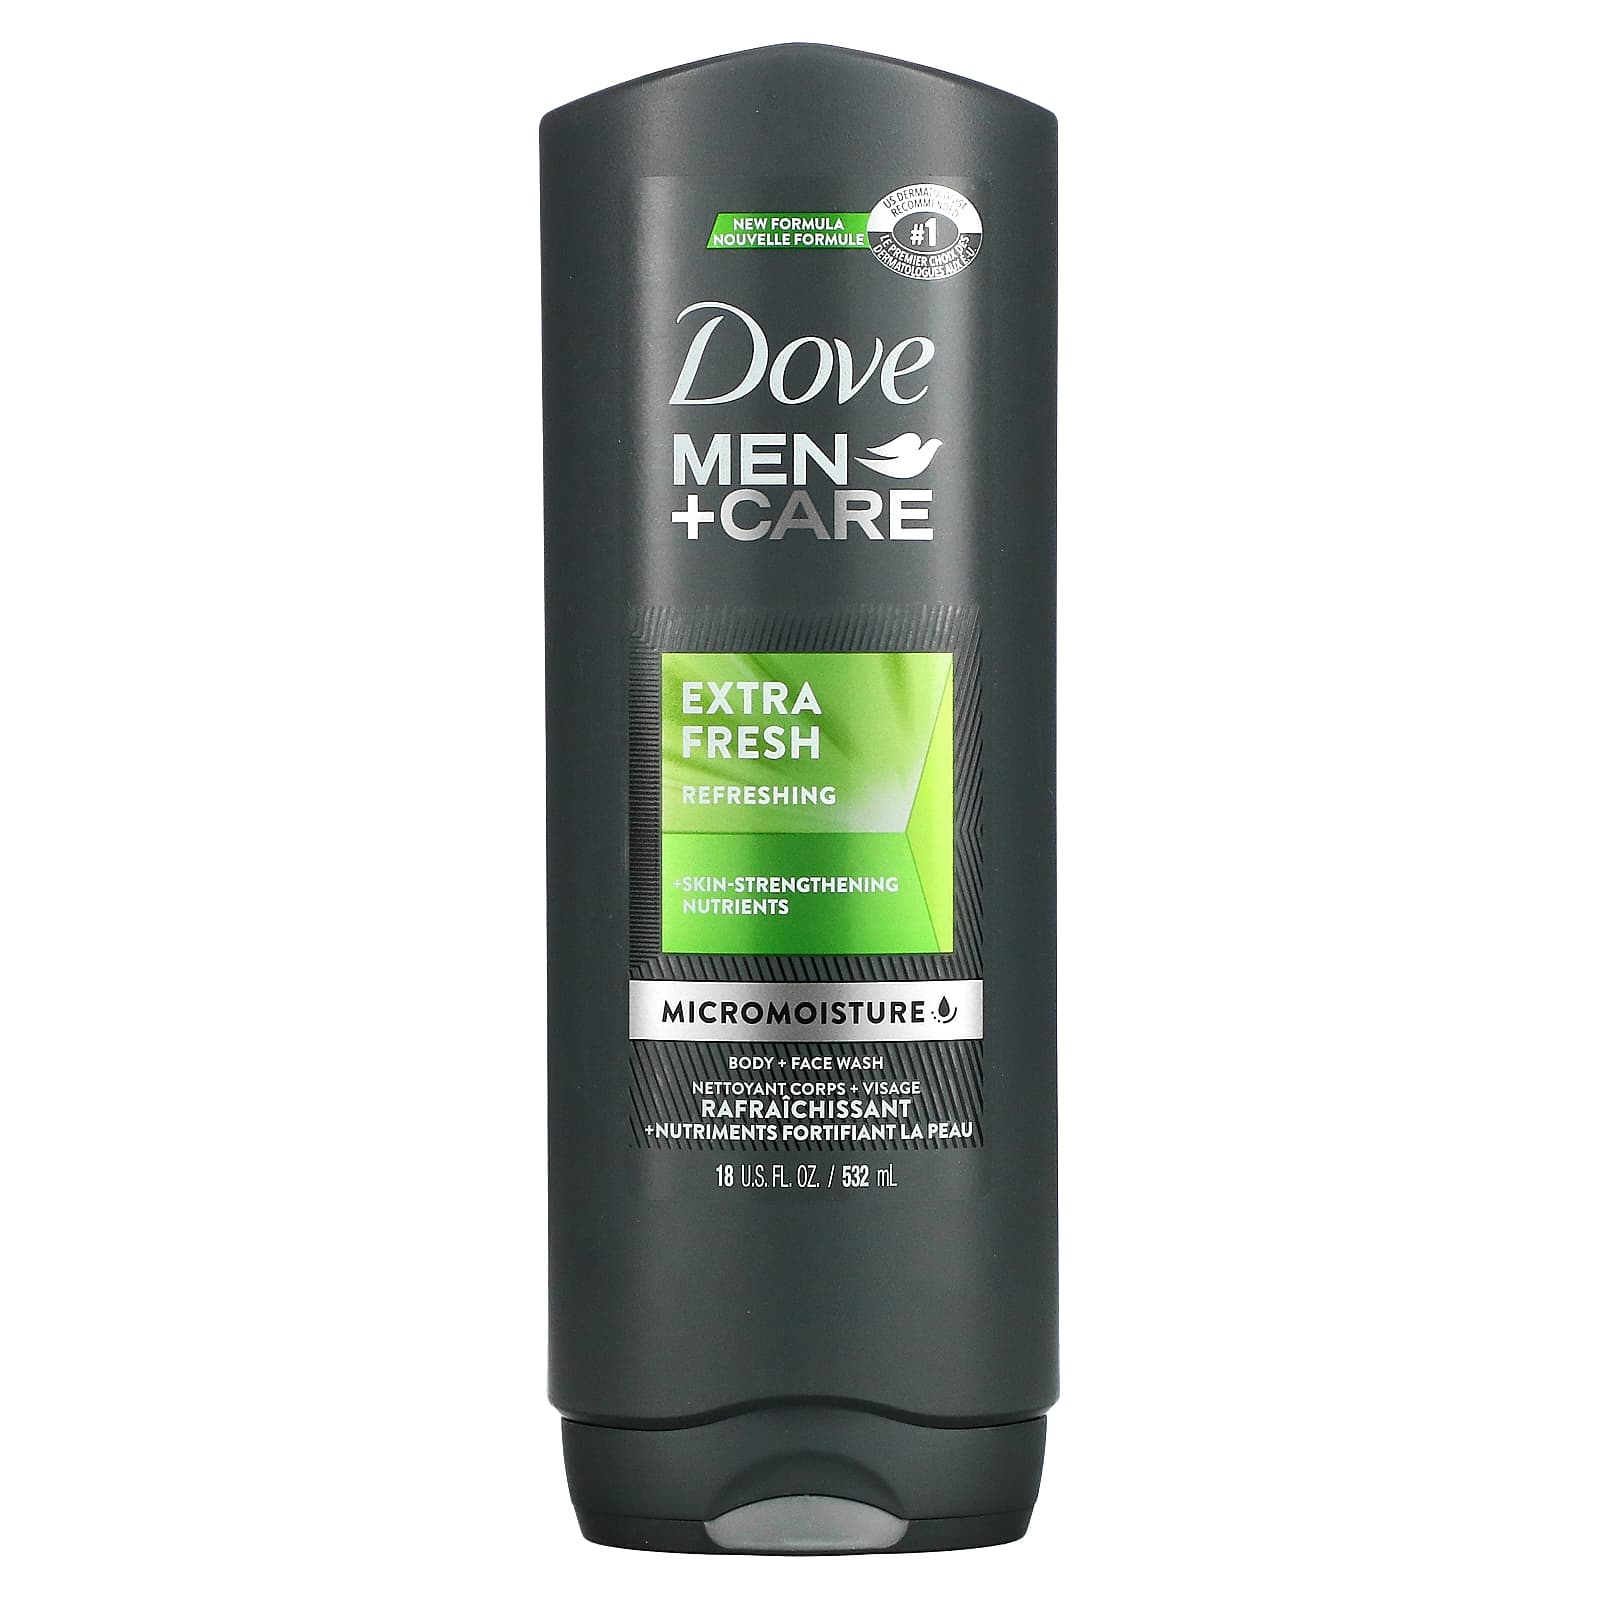 Omtrek Pence Herhaald Dove, Men+Care, Body and Face Wash, Extra Fresh, 18 fl oz (532 ml)